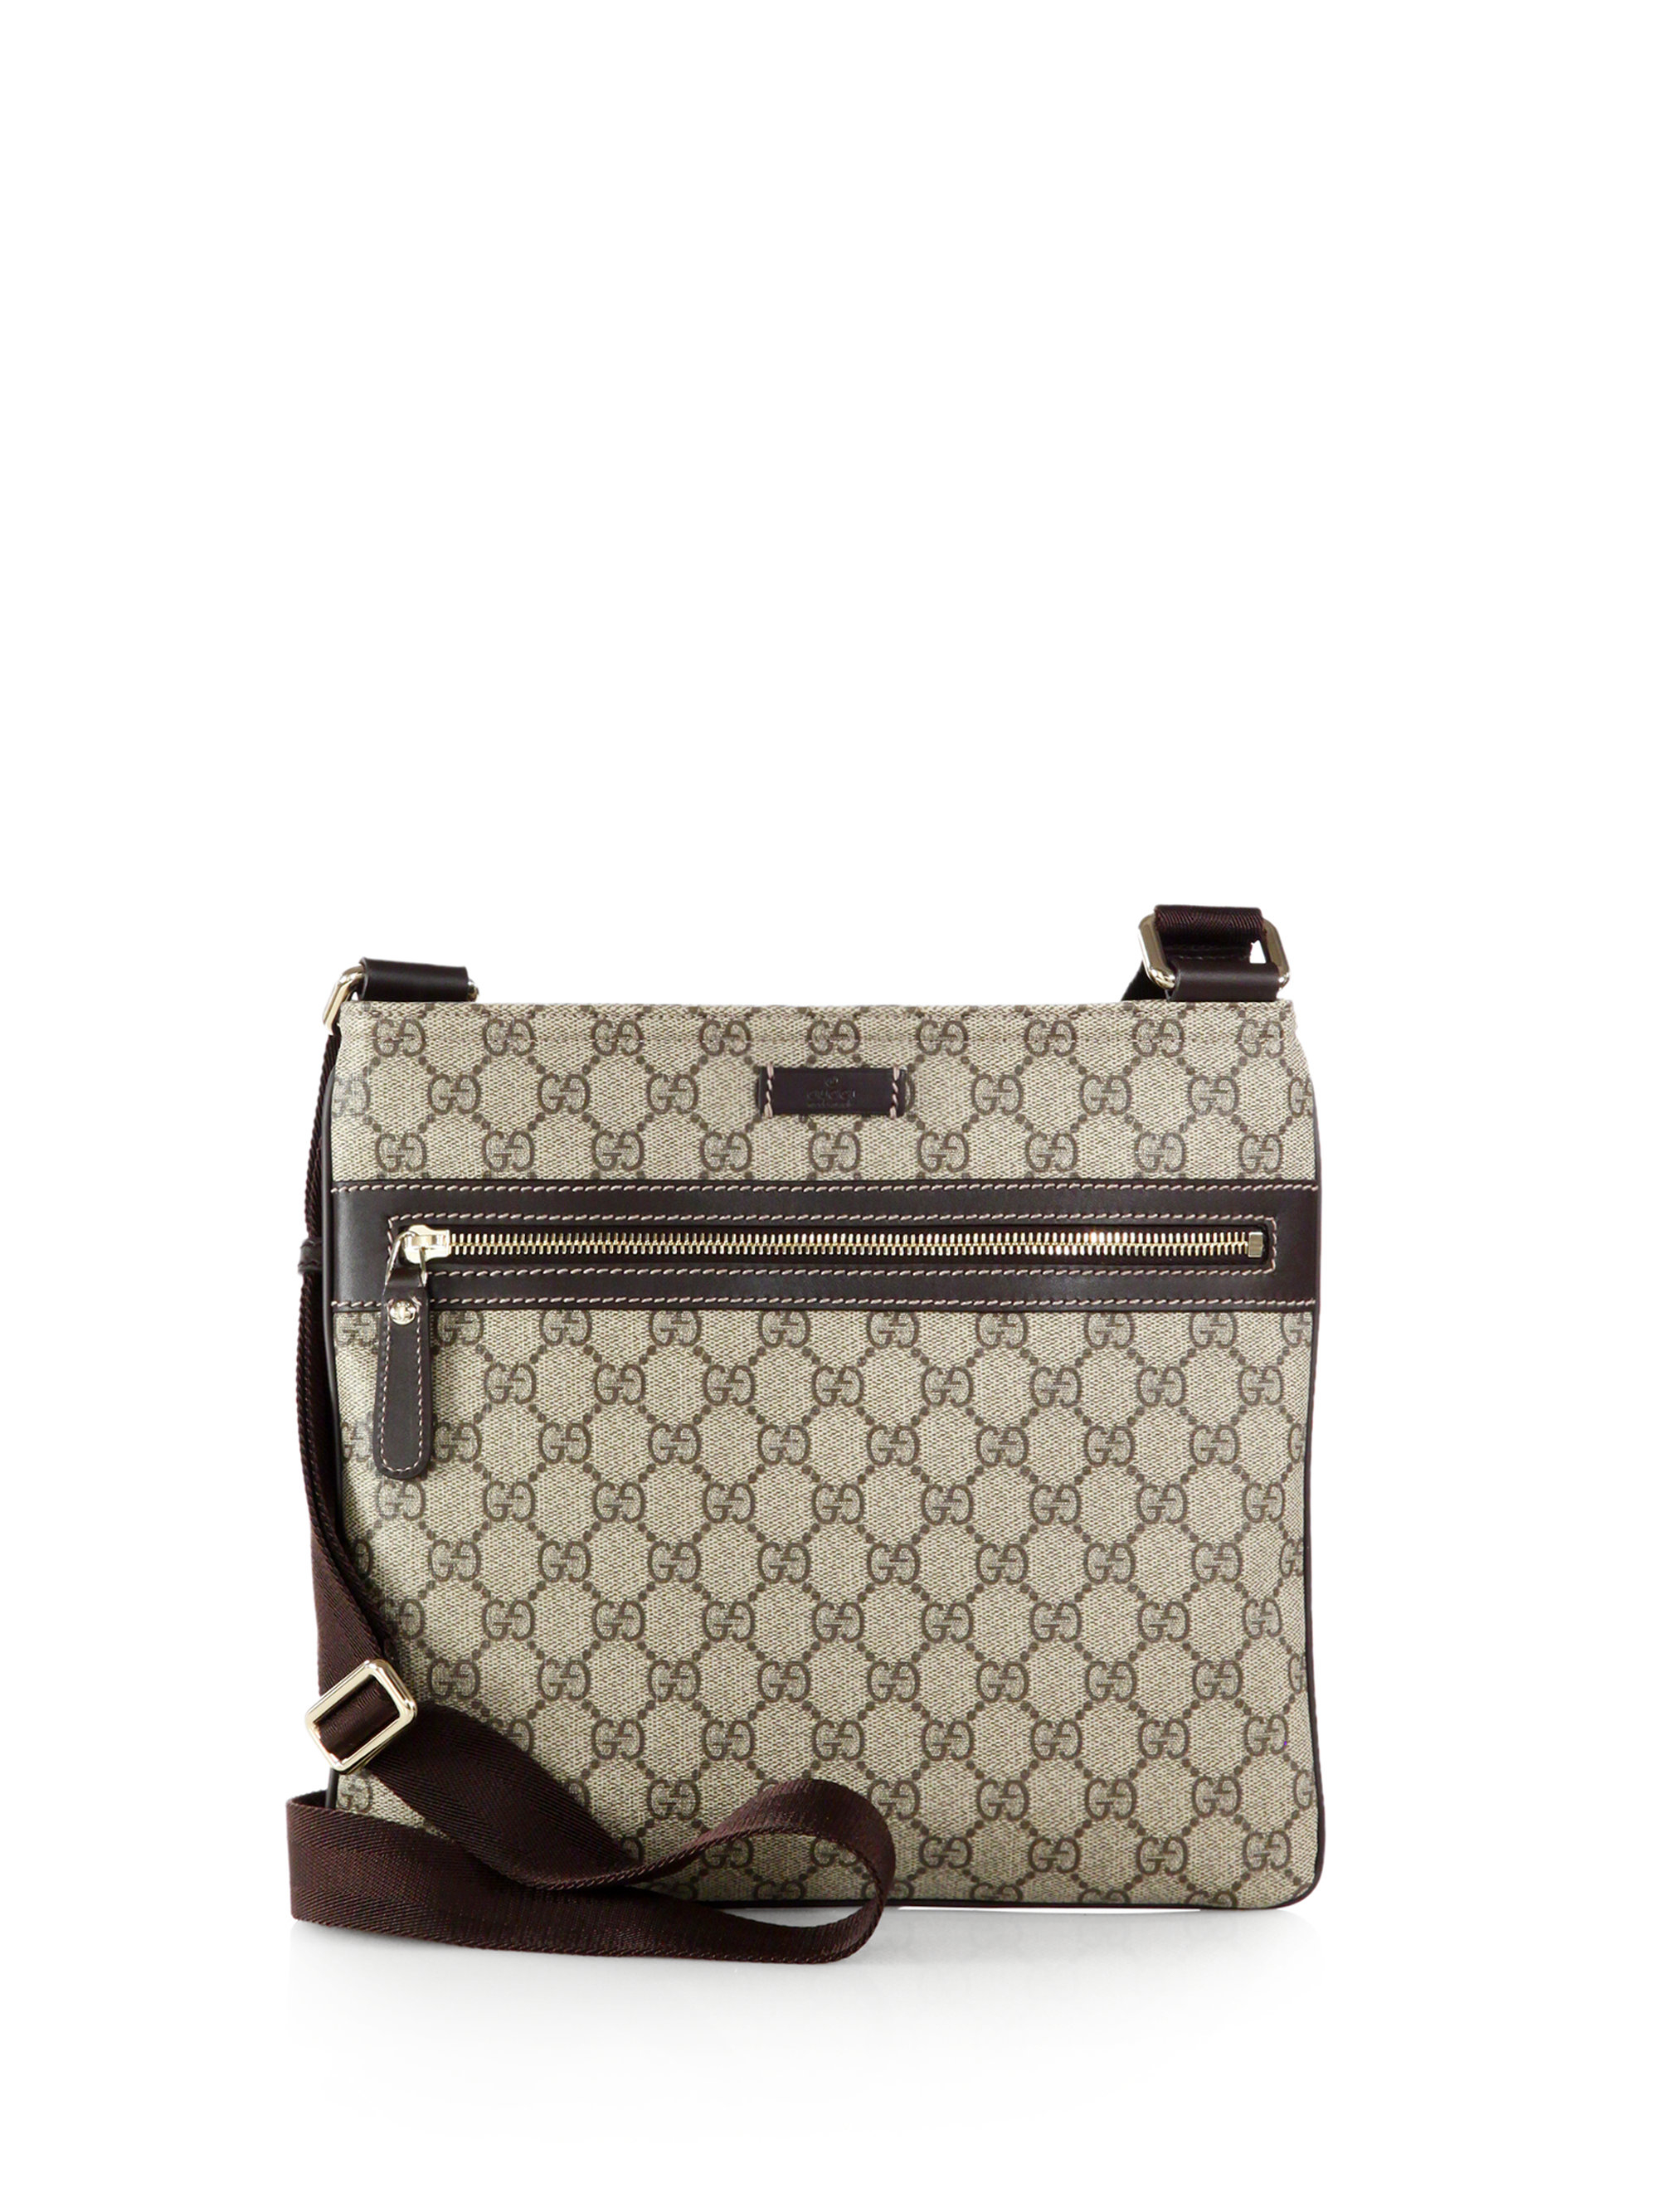 Gucci Joy GG Supreme Flat Messenger Bag in Brown | Lyst